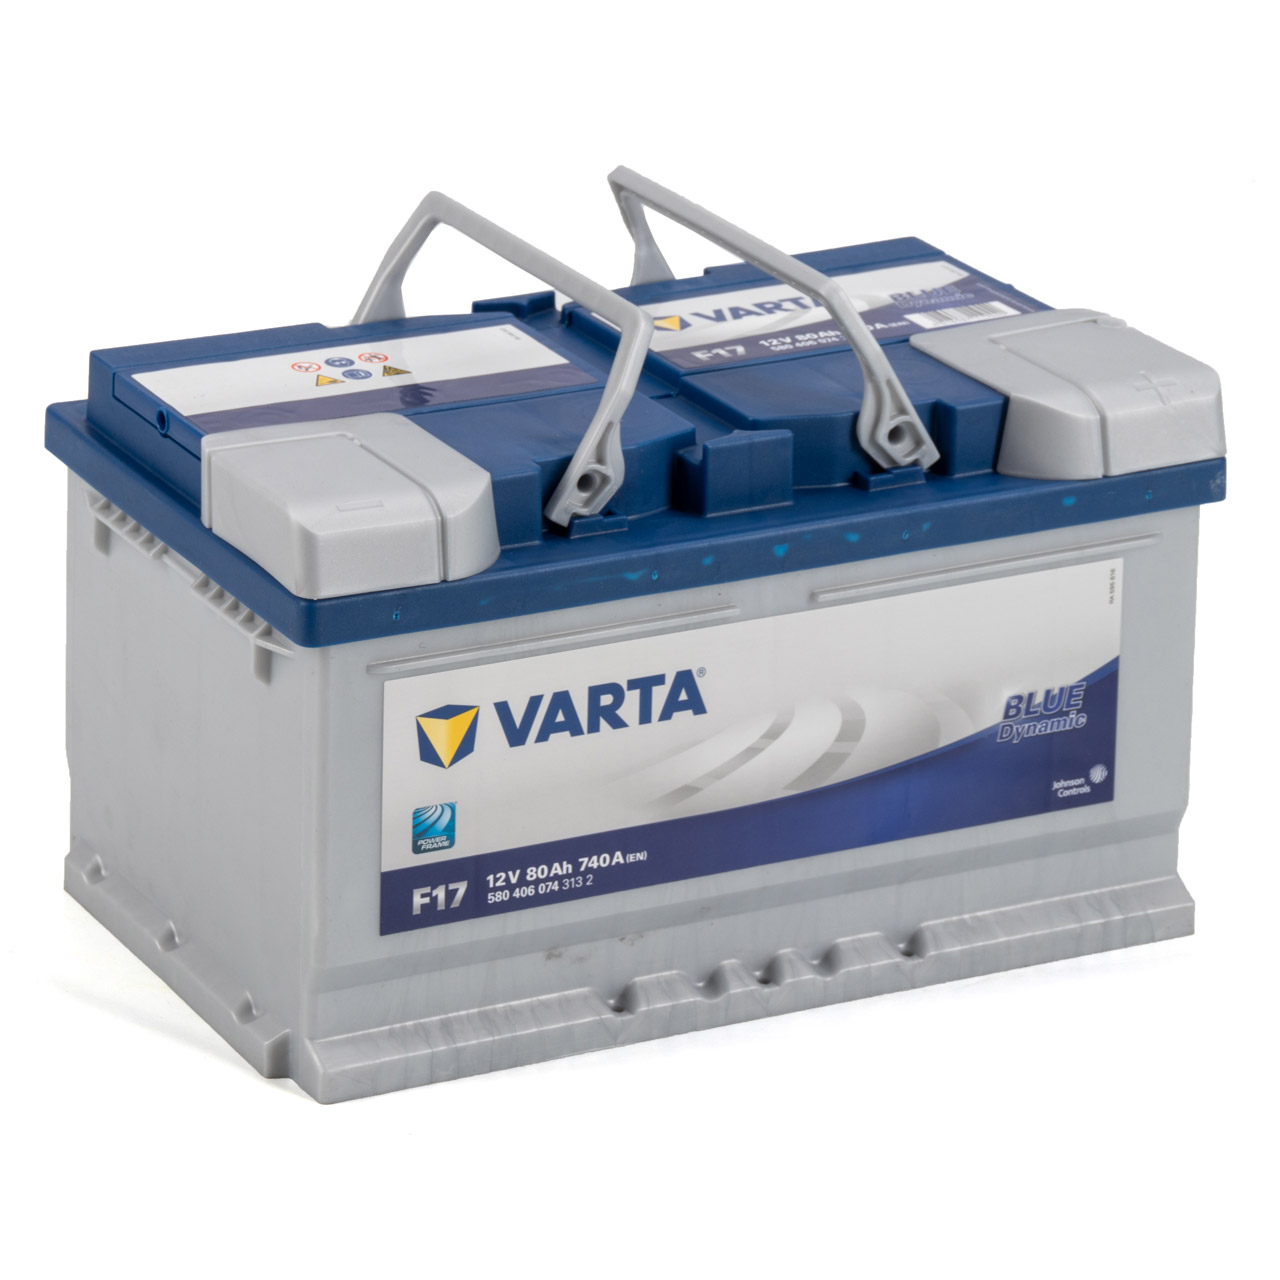 VARTA BLUE dynamic F17 Autobatterie Batterie Starterbatterie 12V 80Ah 740A